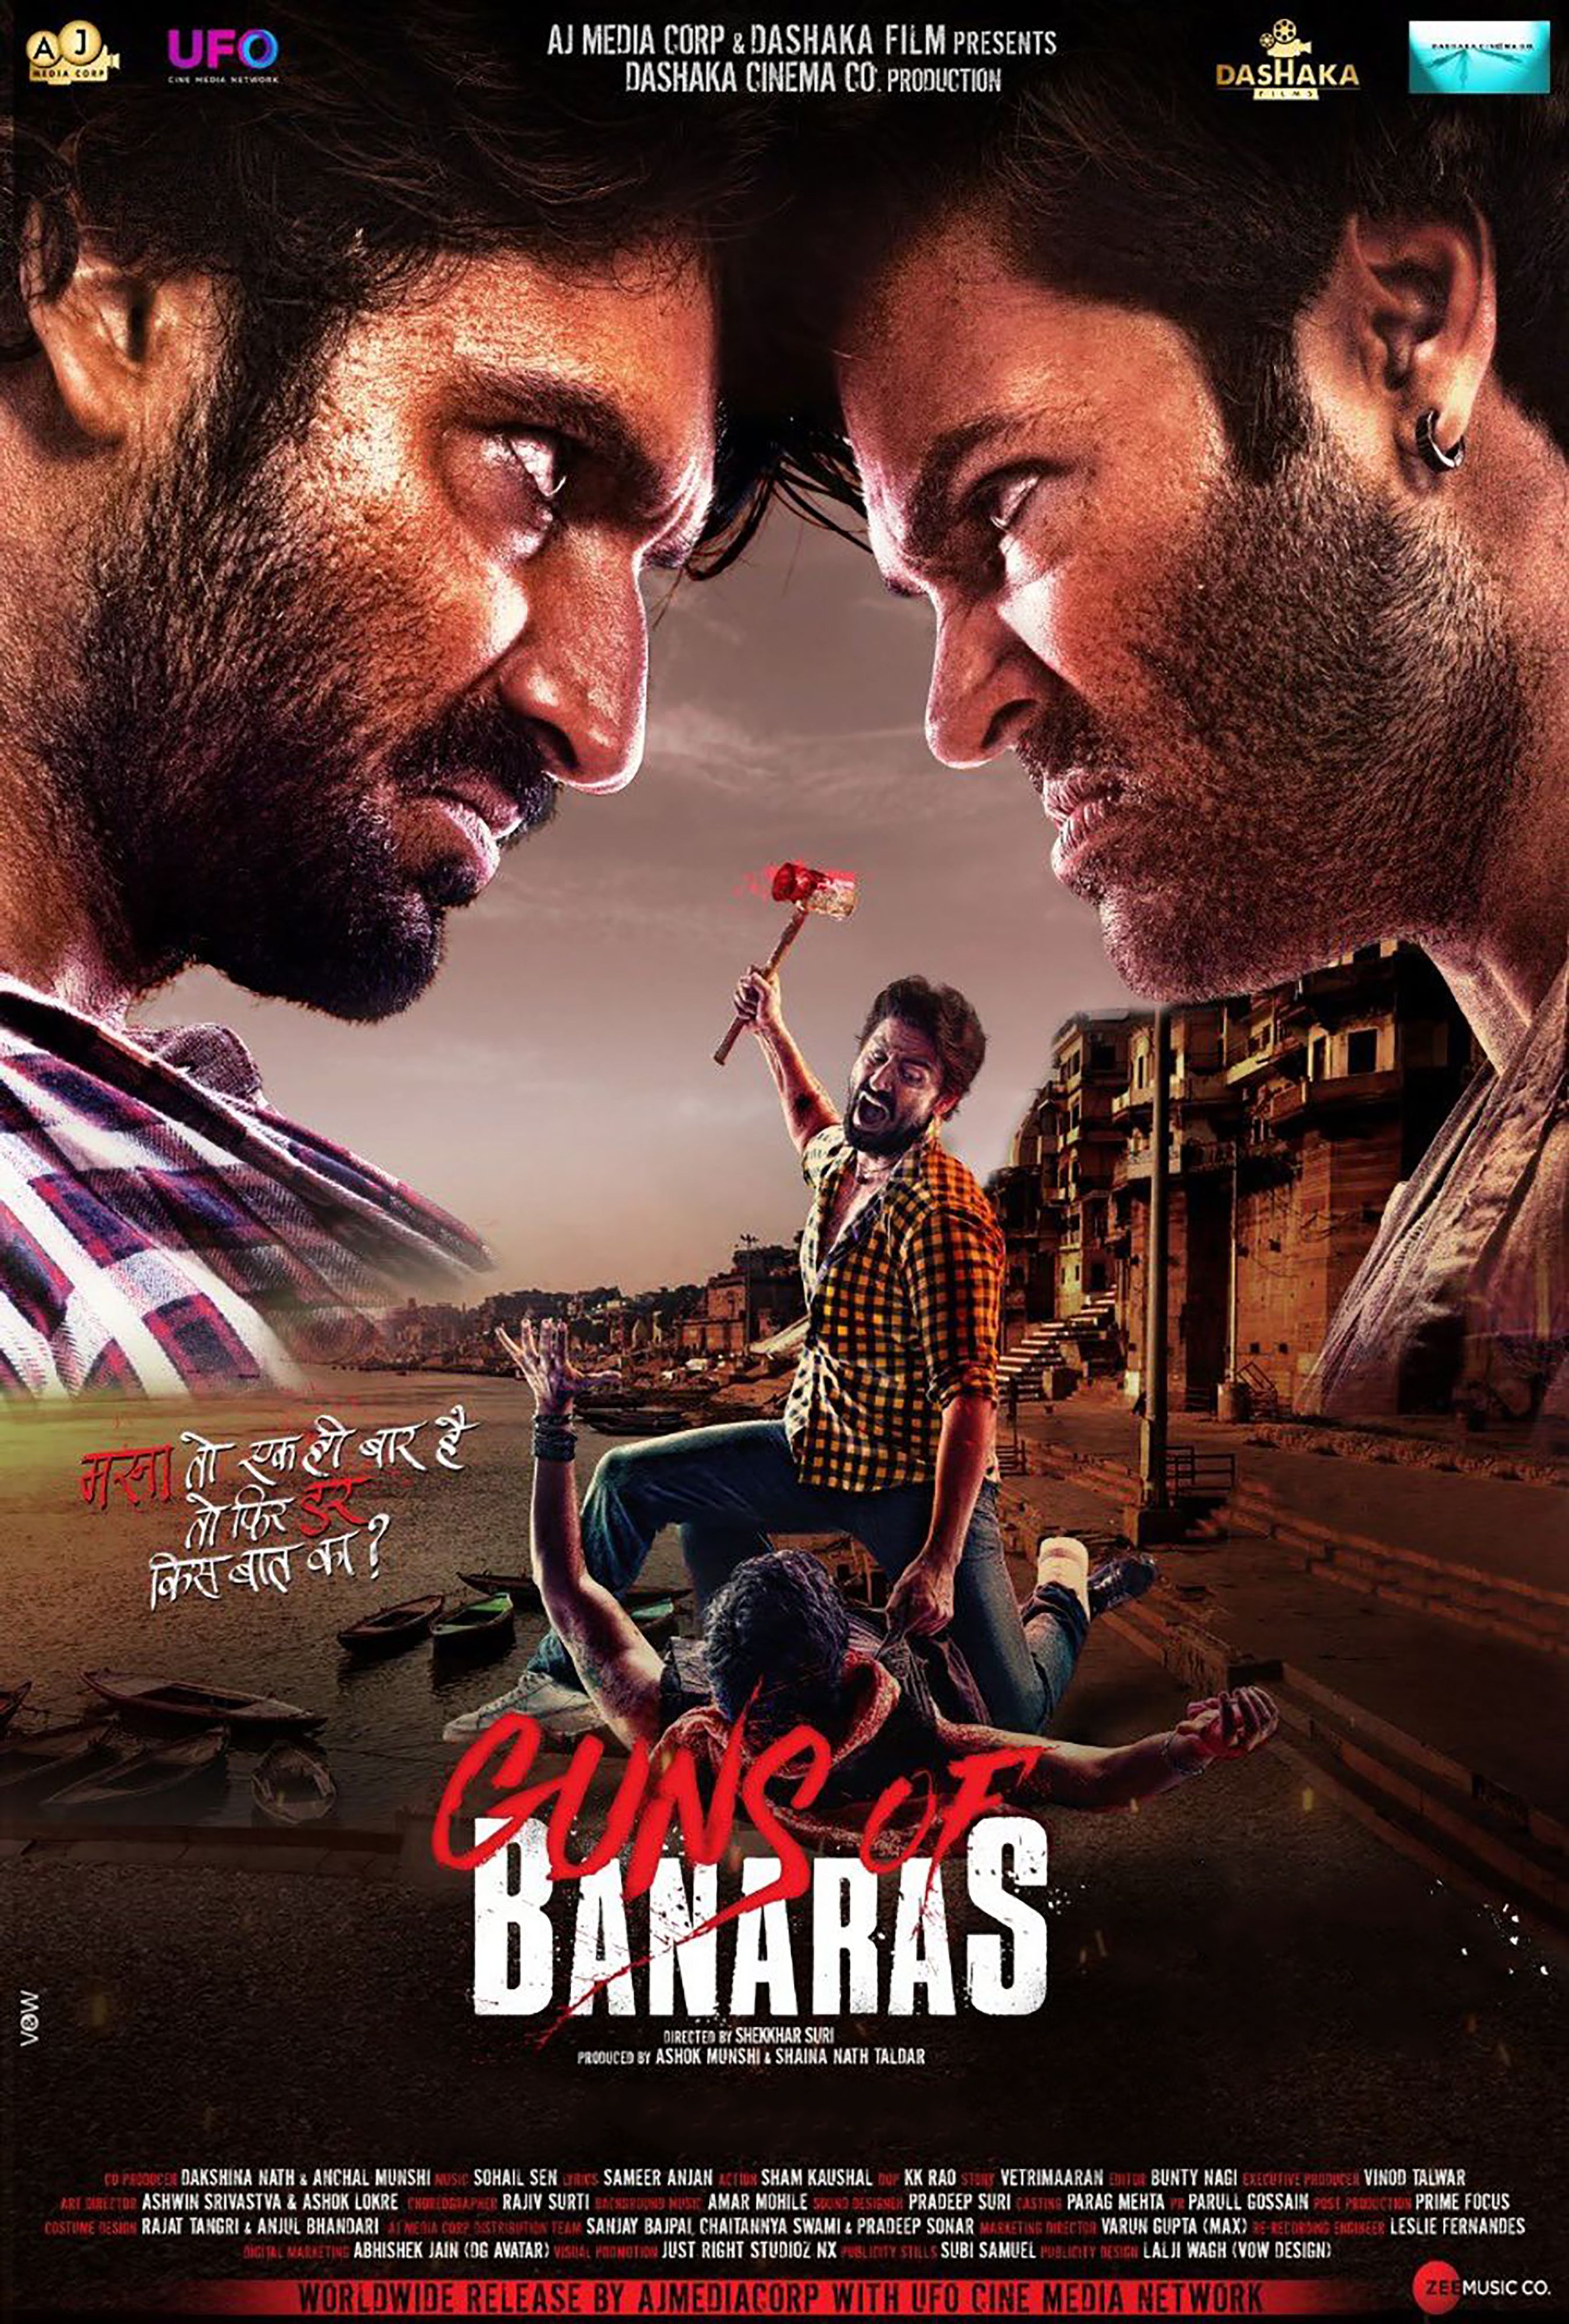 Anjaana Anjaani Full Movie Download In Hindi Kickass Torrent